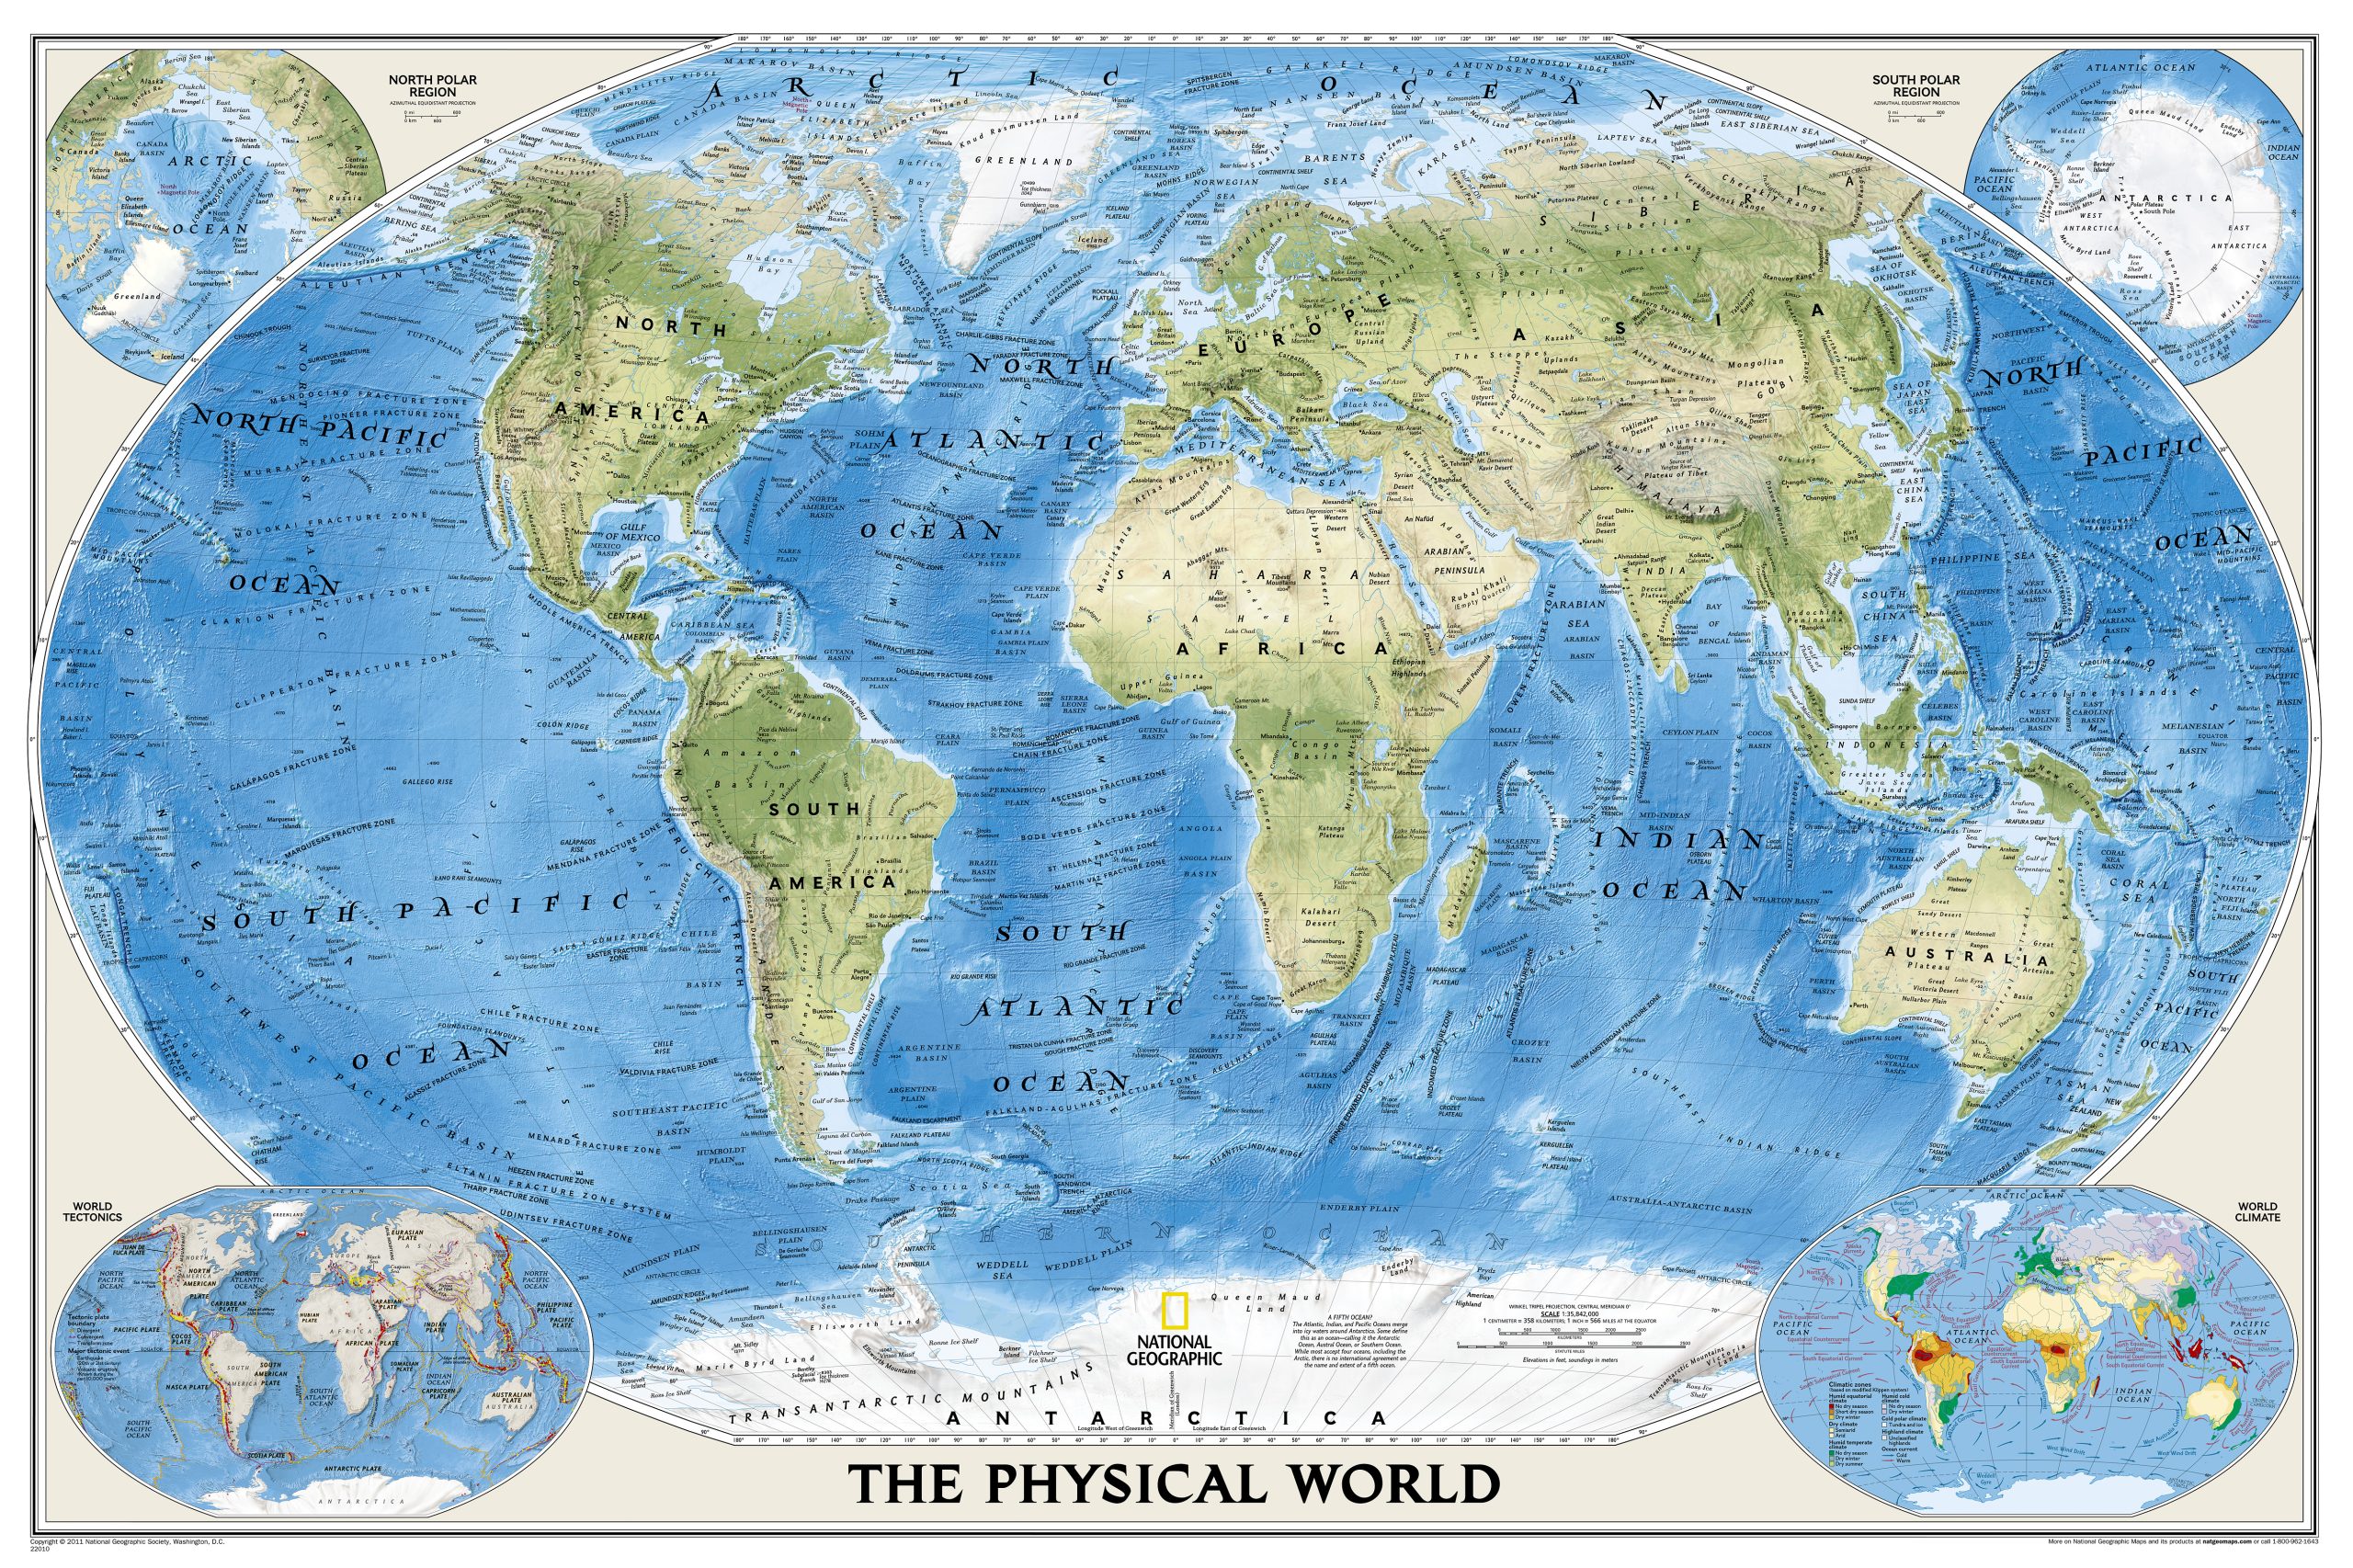 Peta Dunia World Physical and Ocean Floor 2011